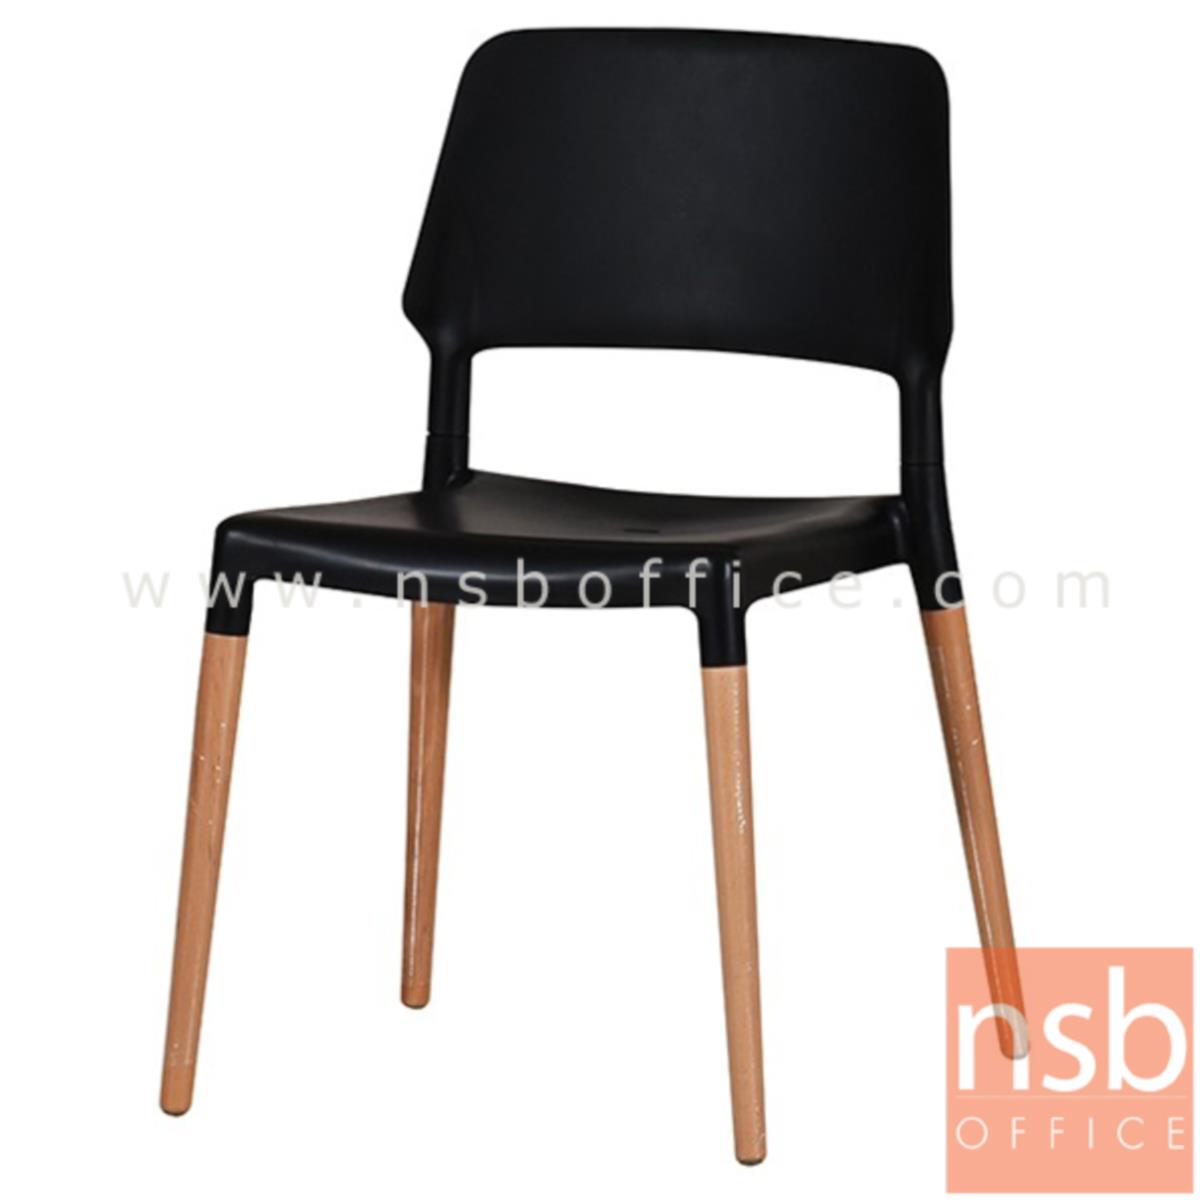 B29A208:เก้าอี้โมเดิร์นพลาสติกโพลี่ รุ่น Lockhart (ล็อกฮาร์ต) ขนาด 51.5W cm. ขาไม้สีบีช